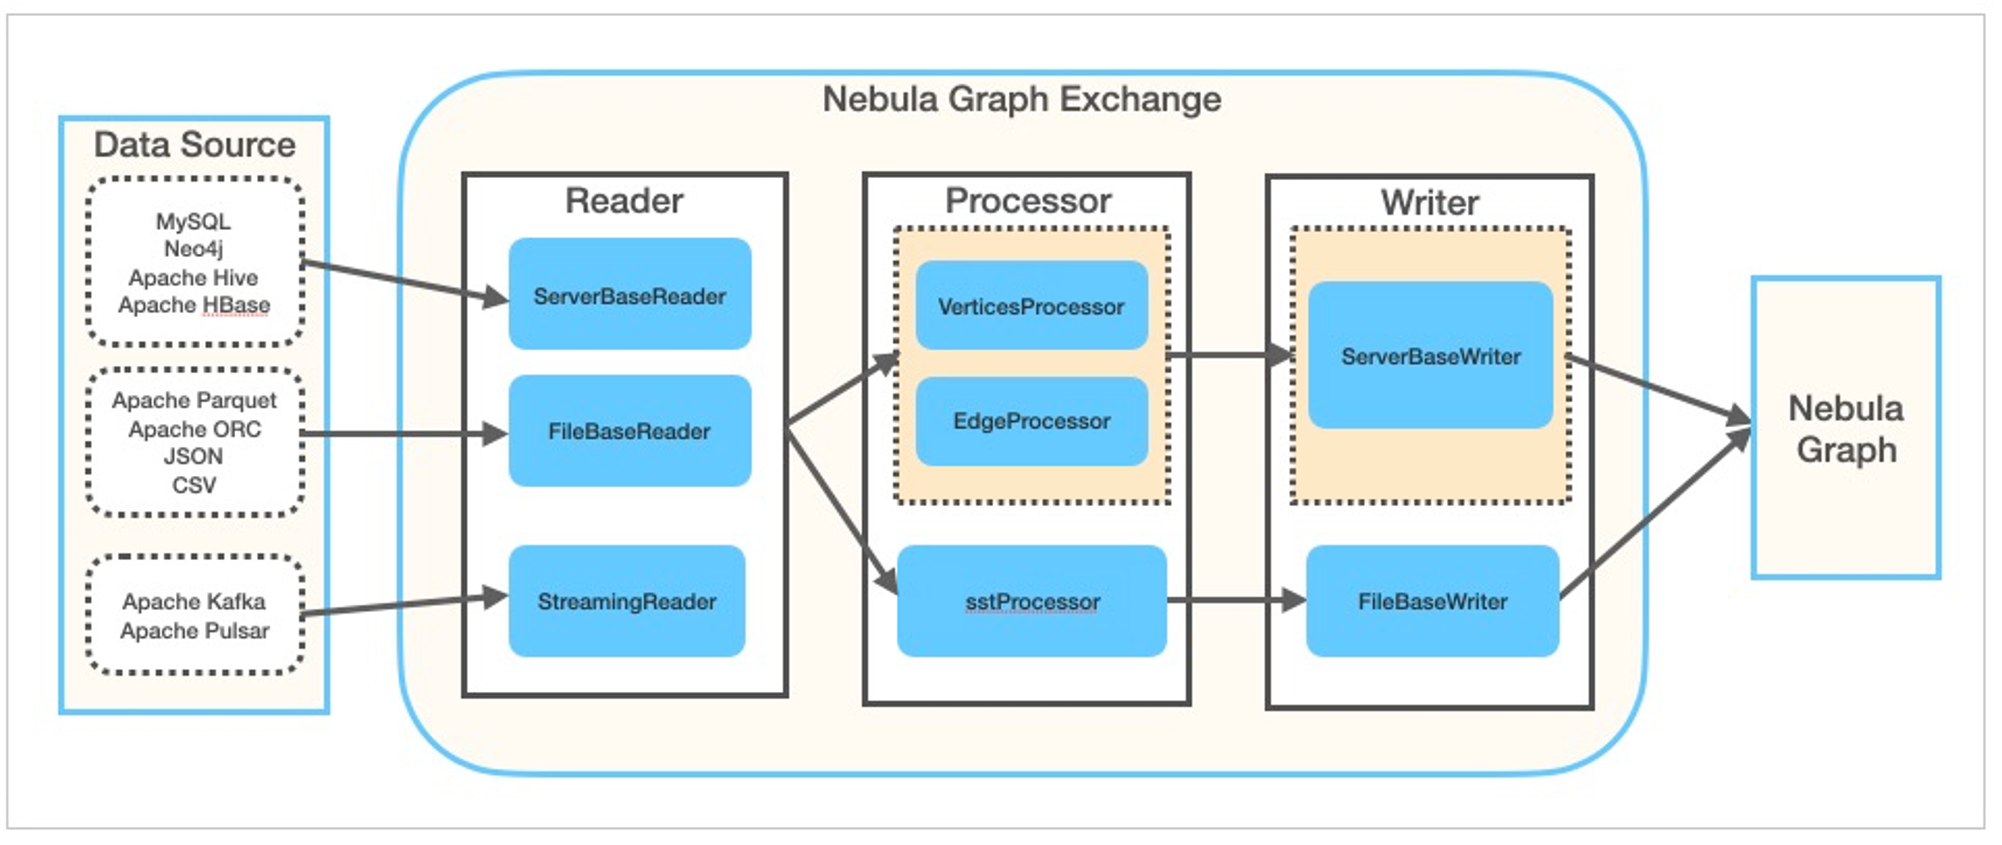 Nebula Graph® Exchange 由 Reader、Processor、Writer 组成，可以完成多种不同格式和来源的数据向 Nebula Graph 的迁移